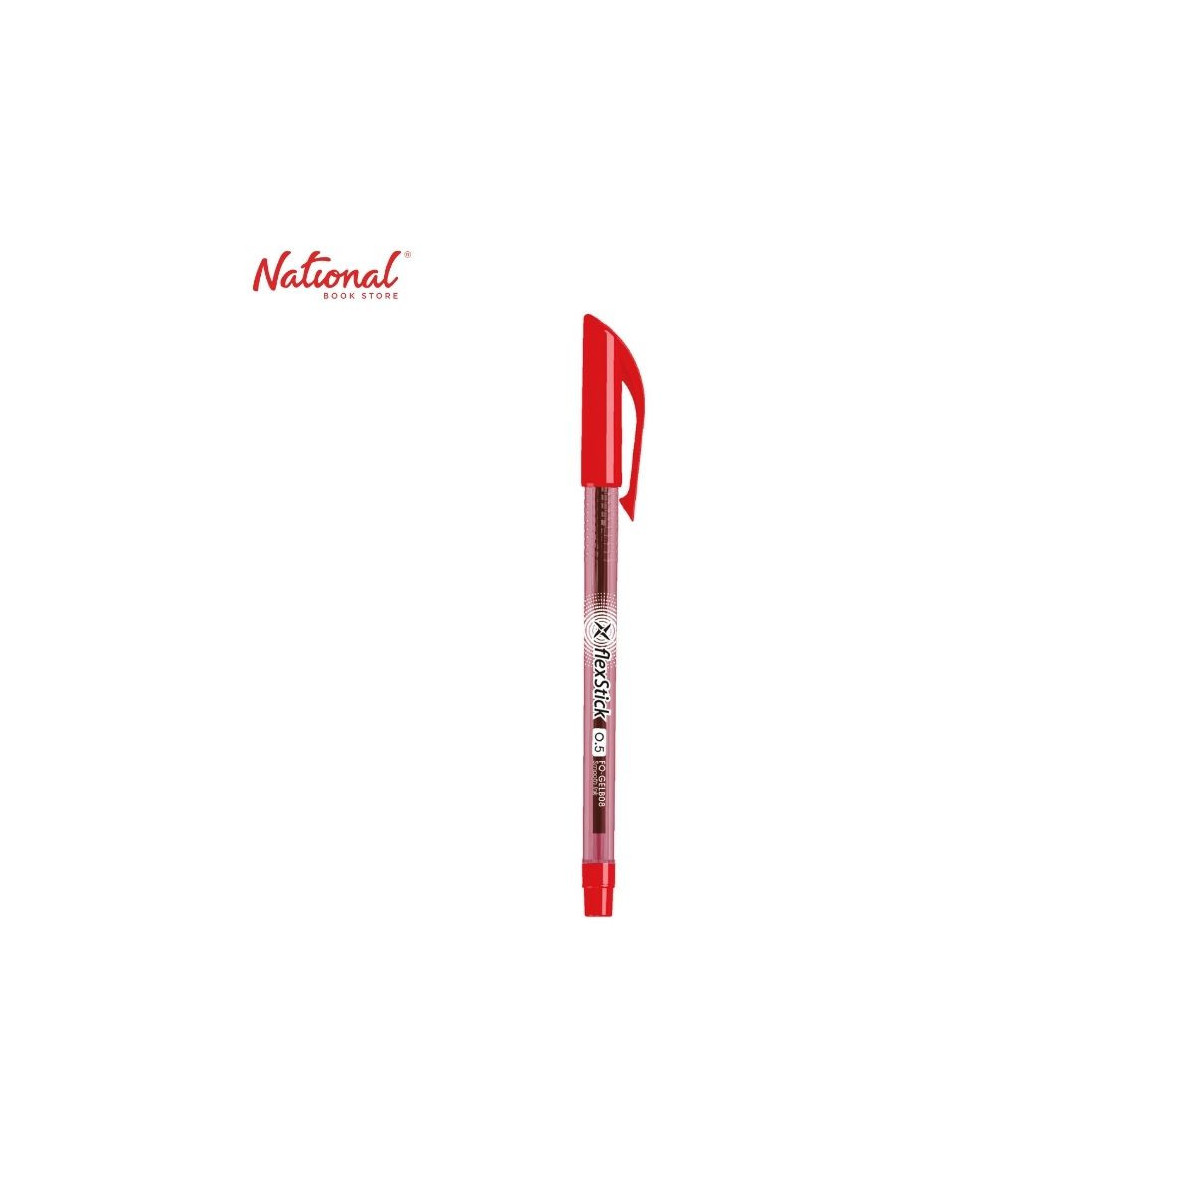 Flex Office Flexstick Gel Pen Red 0.5mm FO-GELB08